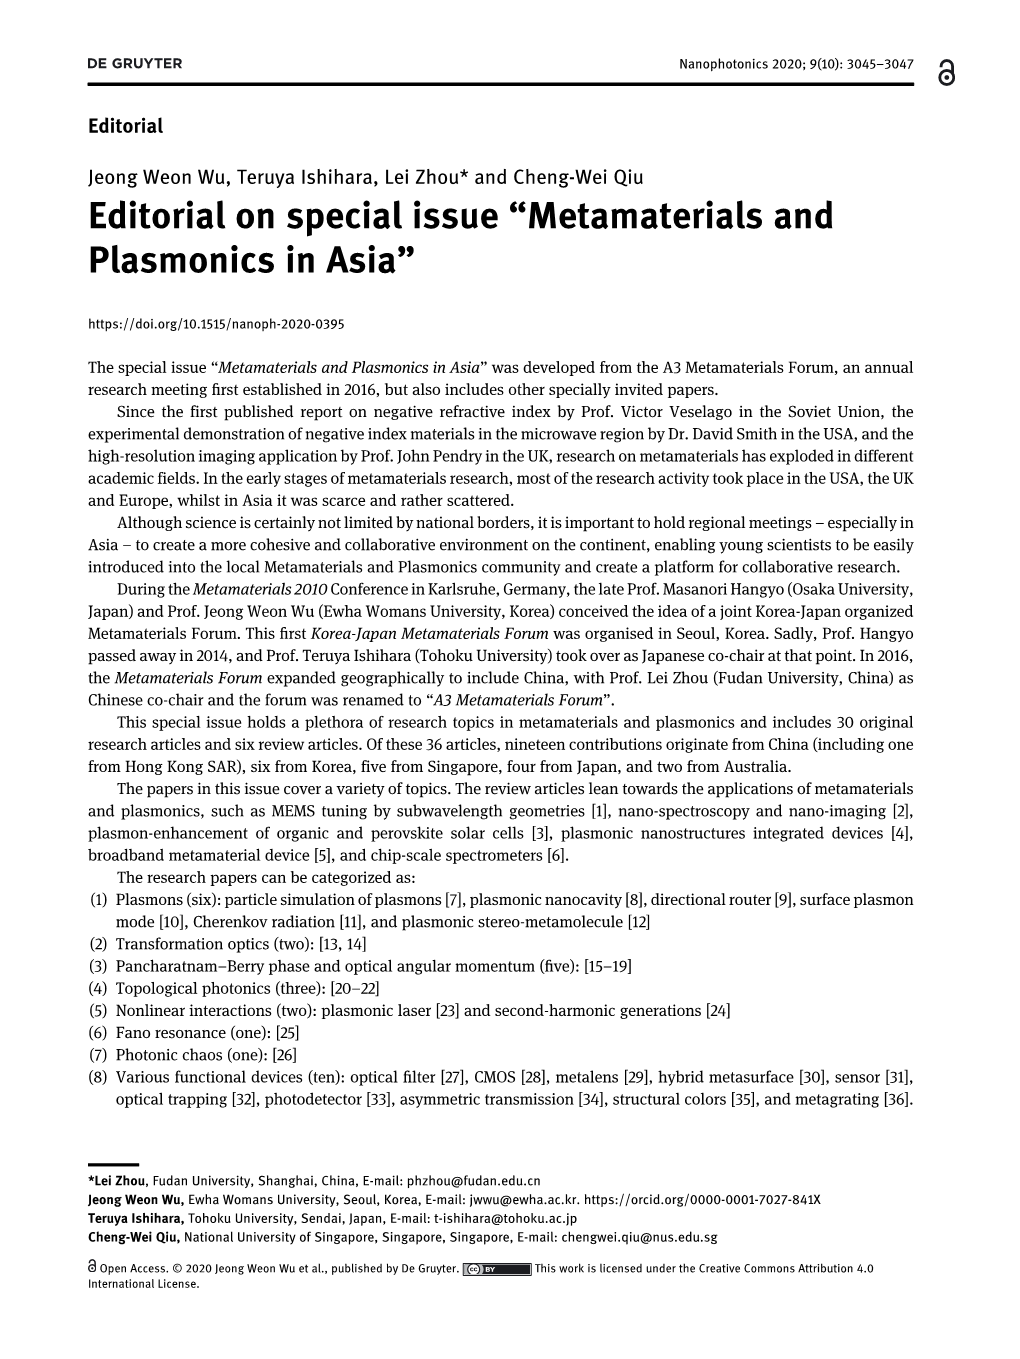 Editorial on Special Issue “Metamaterials and Plasmonics in Asia”